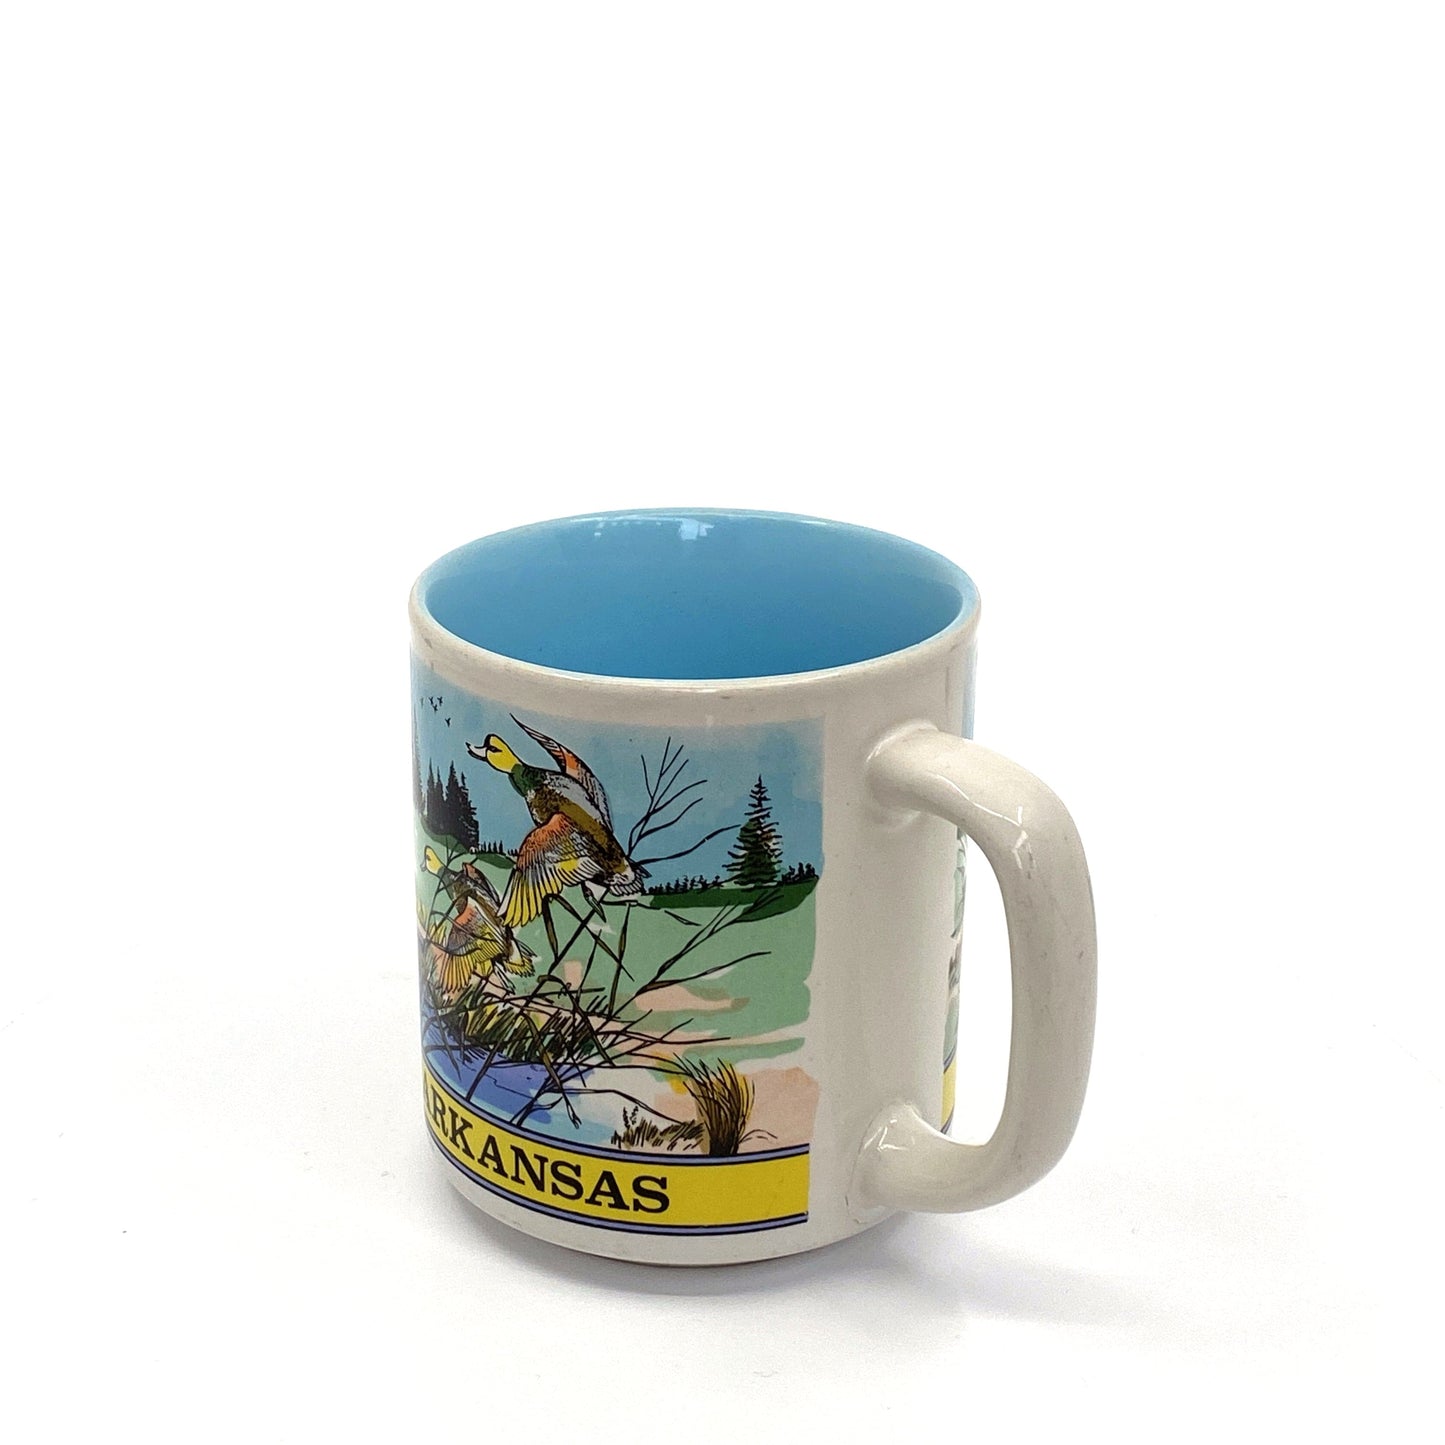 State of Arkansas Travel Tourism Souvenir Coffee Cup/Mug 14 Fl Oz